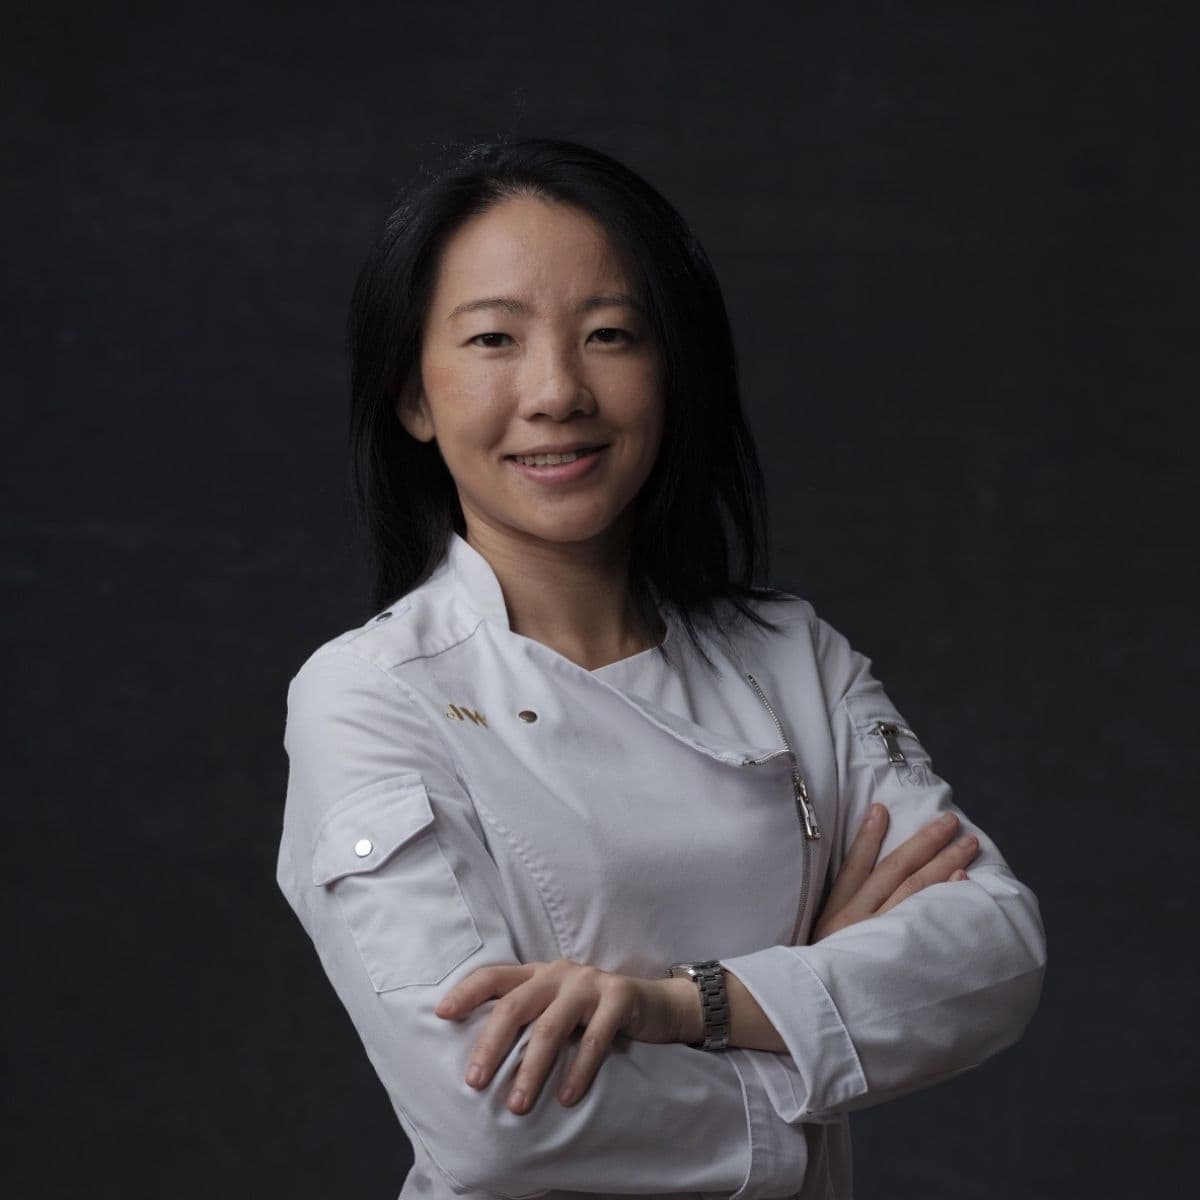 Janice Wong posing in White Chef Jacket